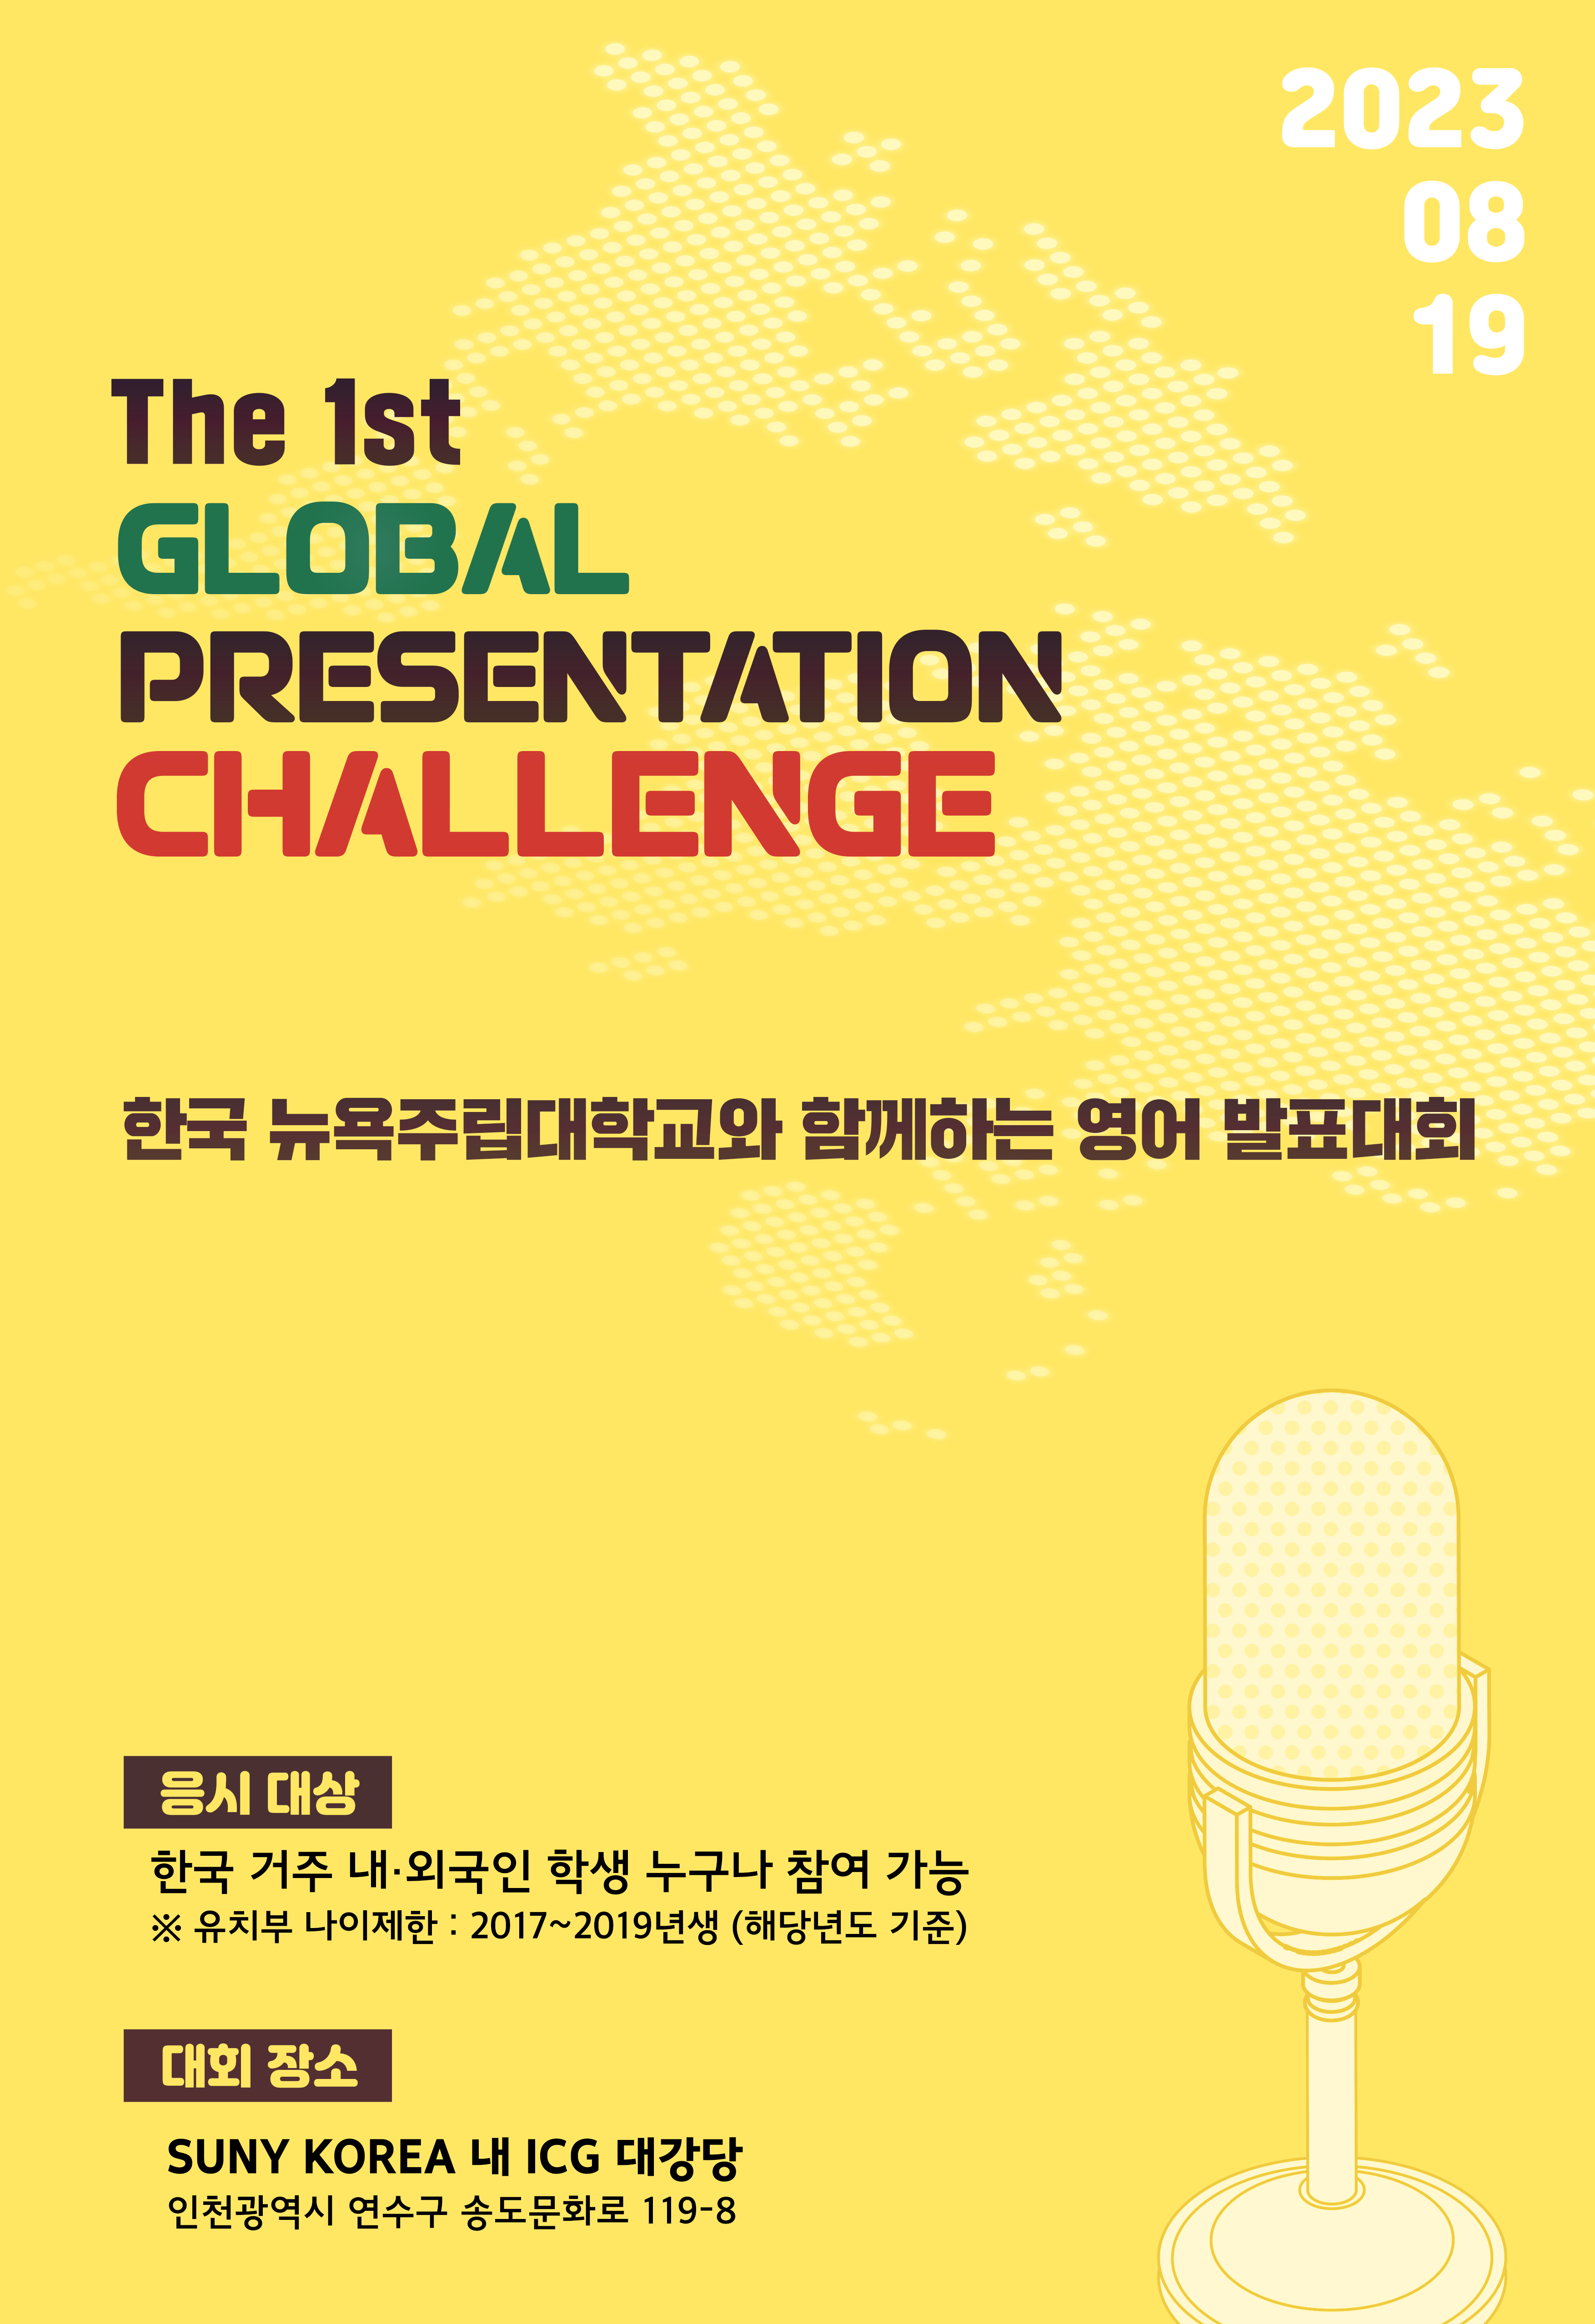 The 1st Global Presentation Challenge